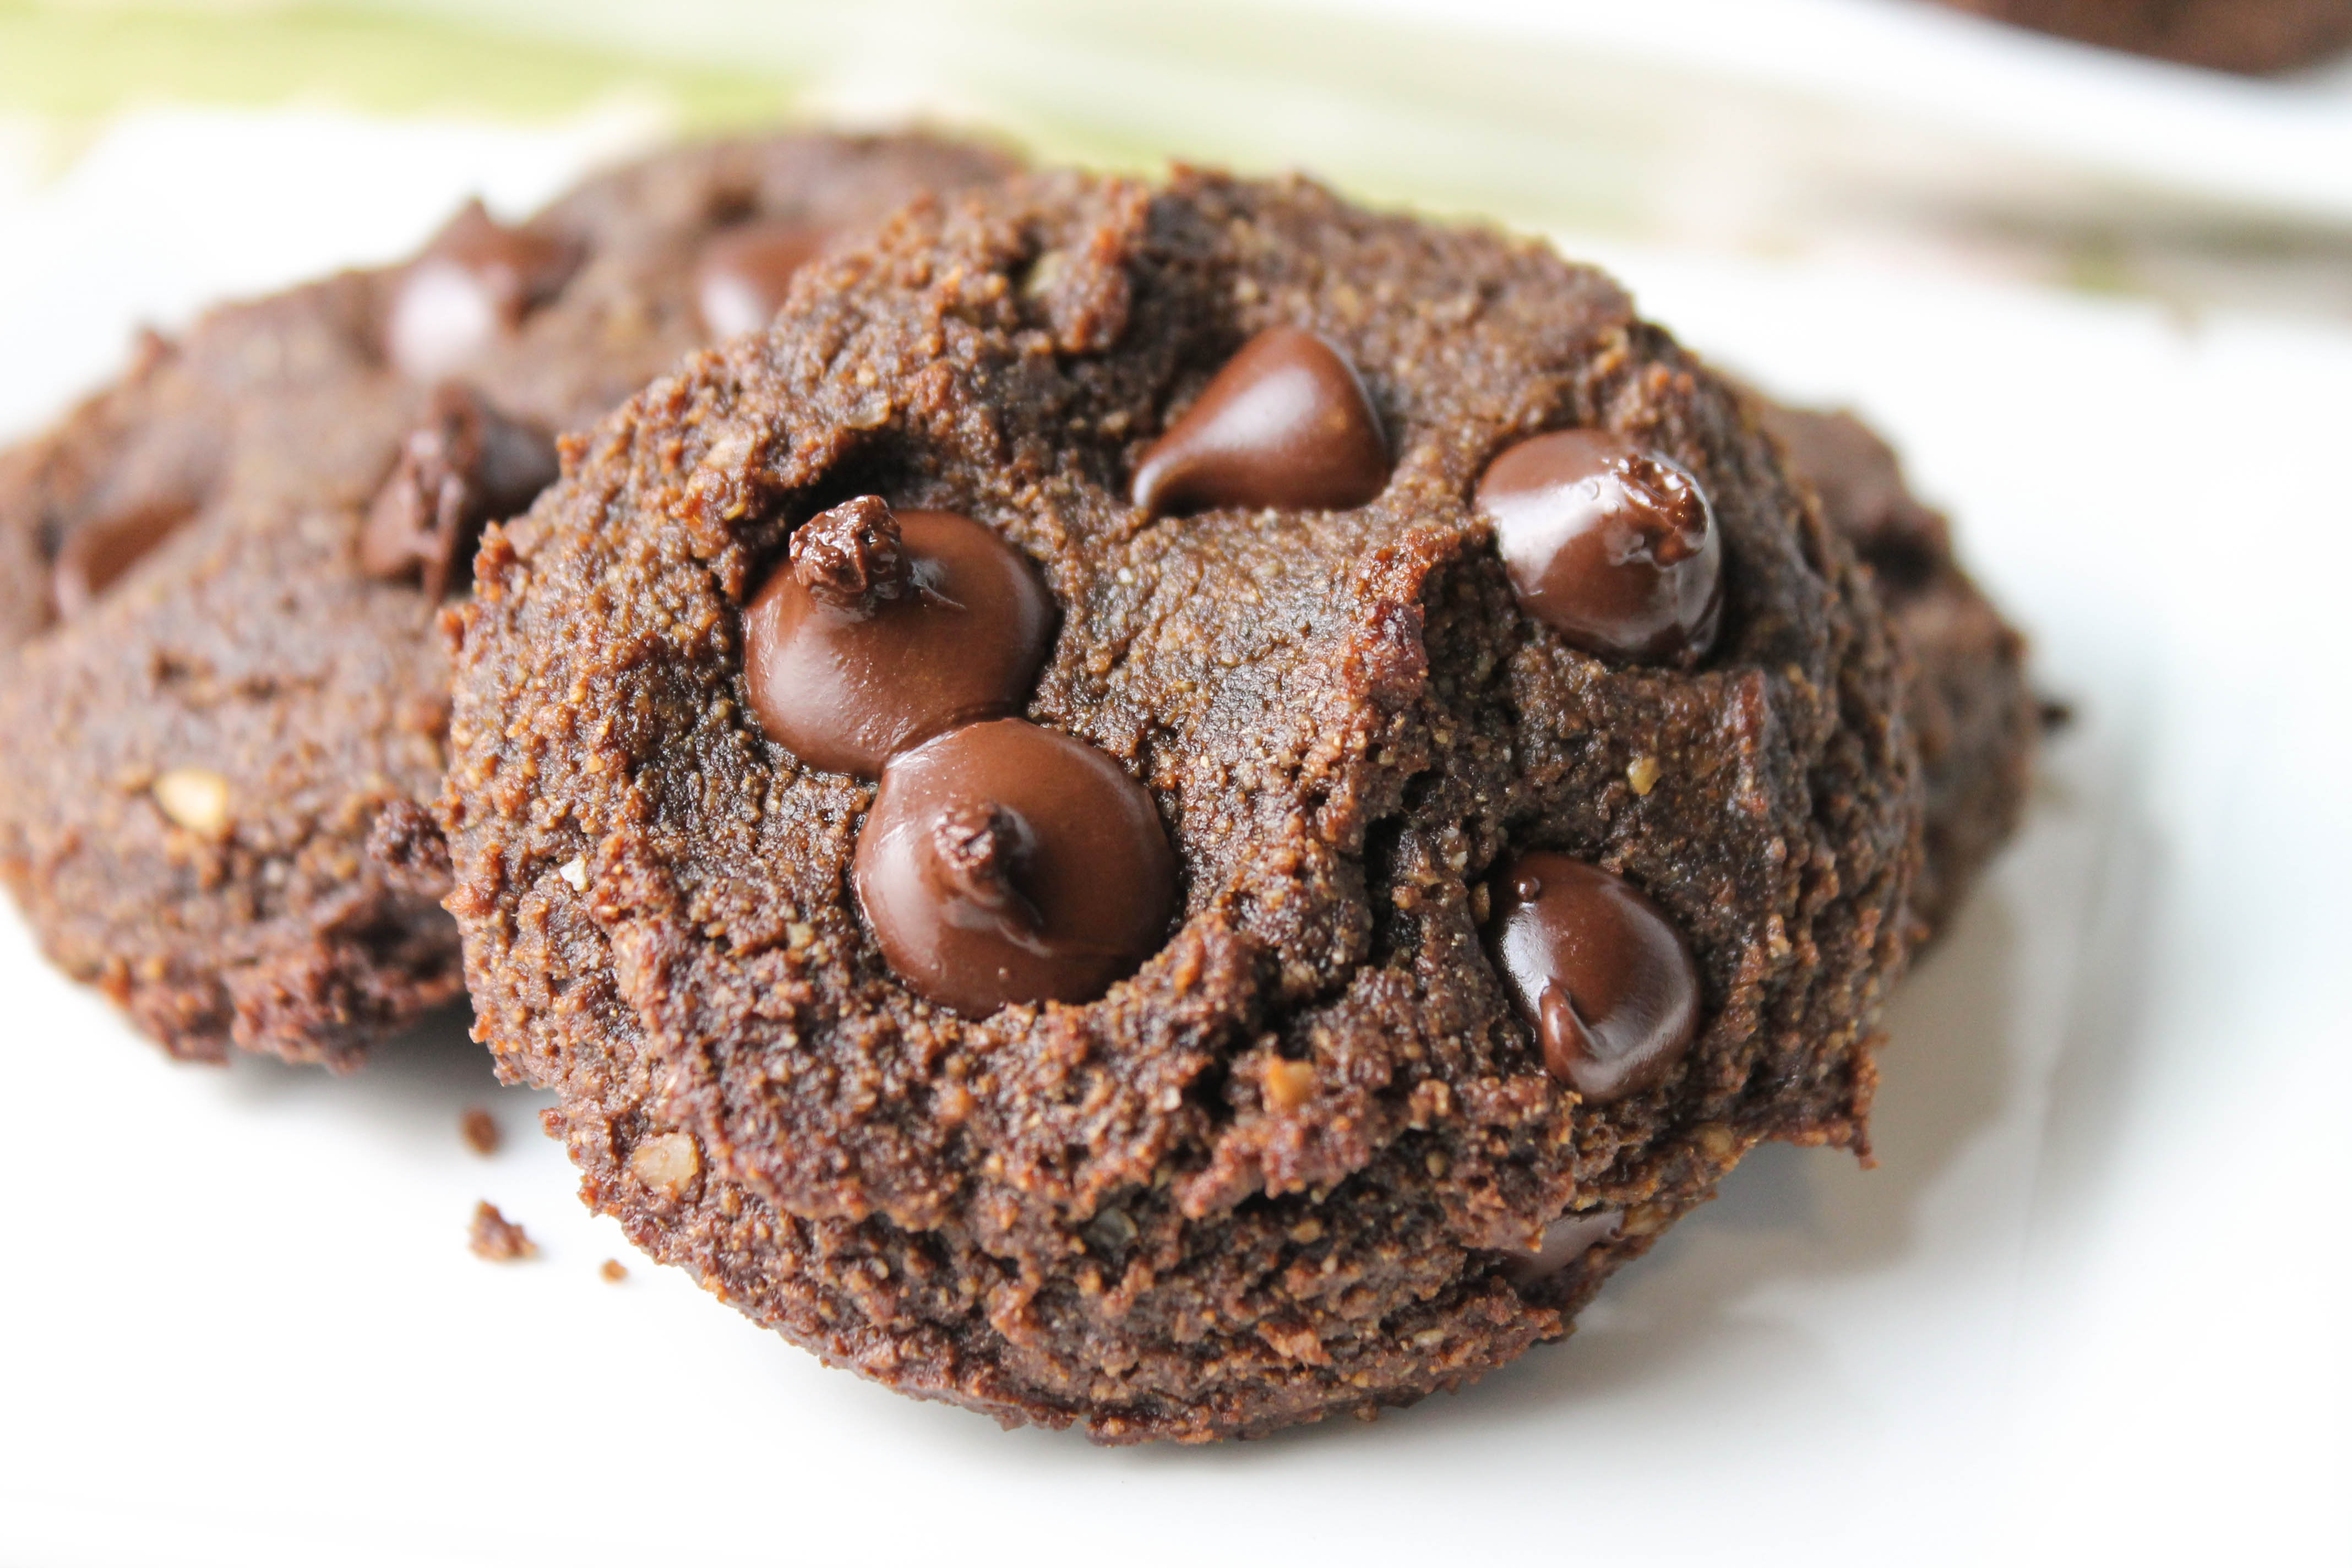 Paleo Double Chocolate Chip Cookies #vegan #paleo #keto #eggfree #dairyfree #cookies #chocolate #glutenfree